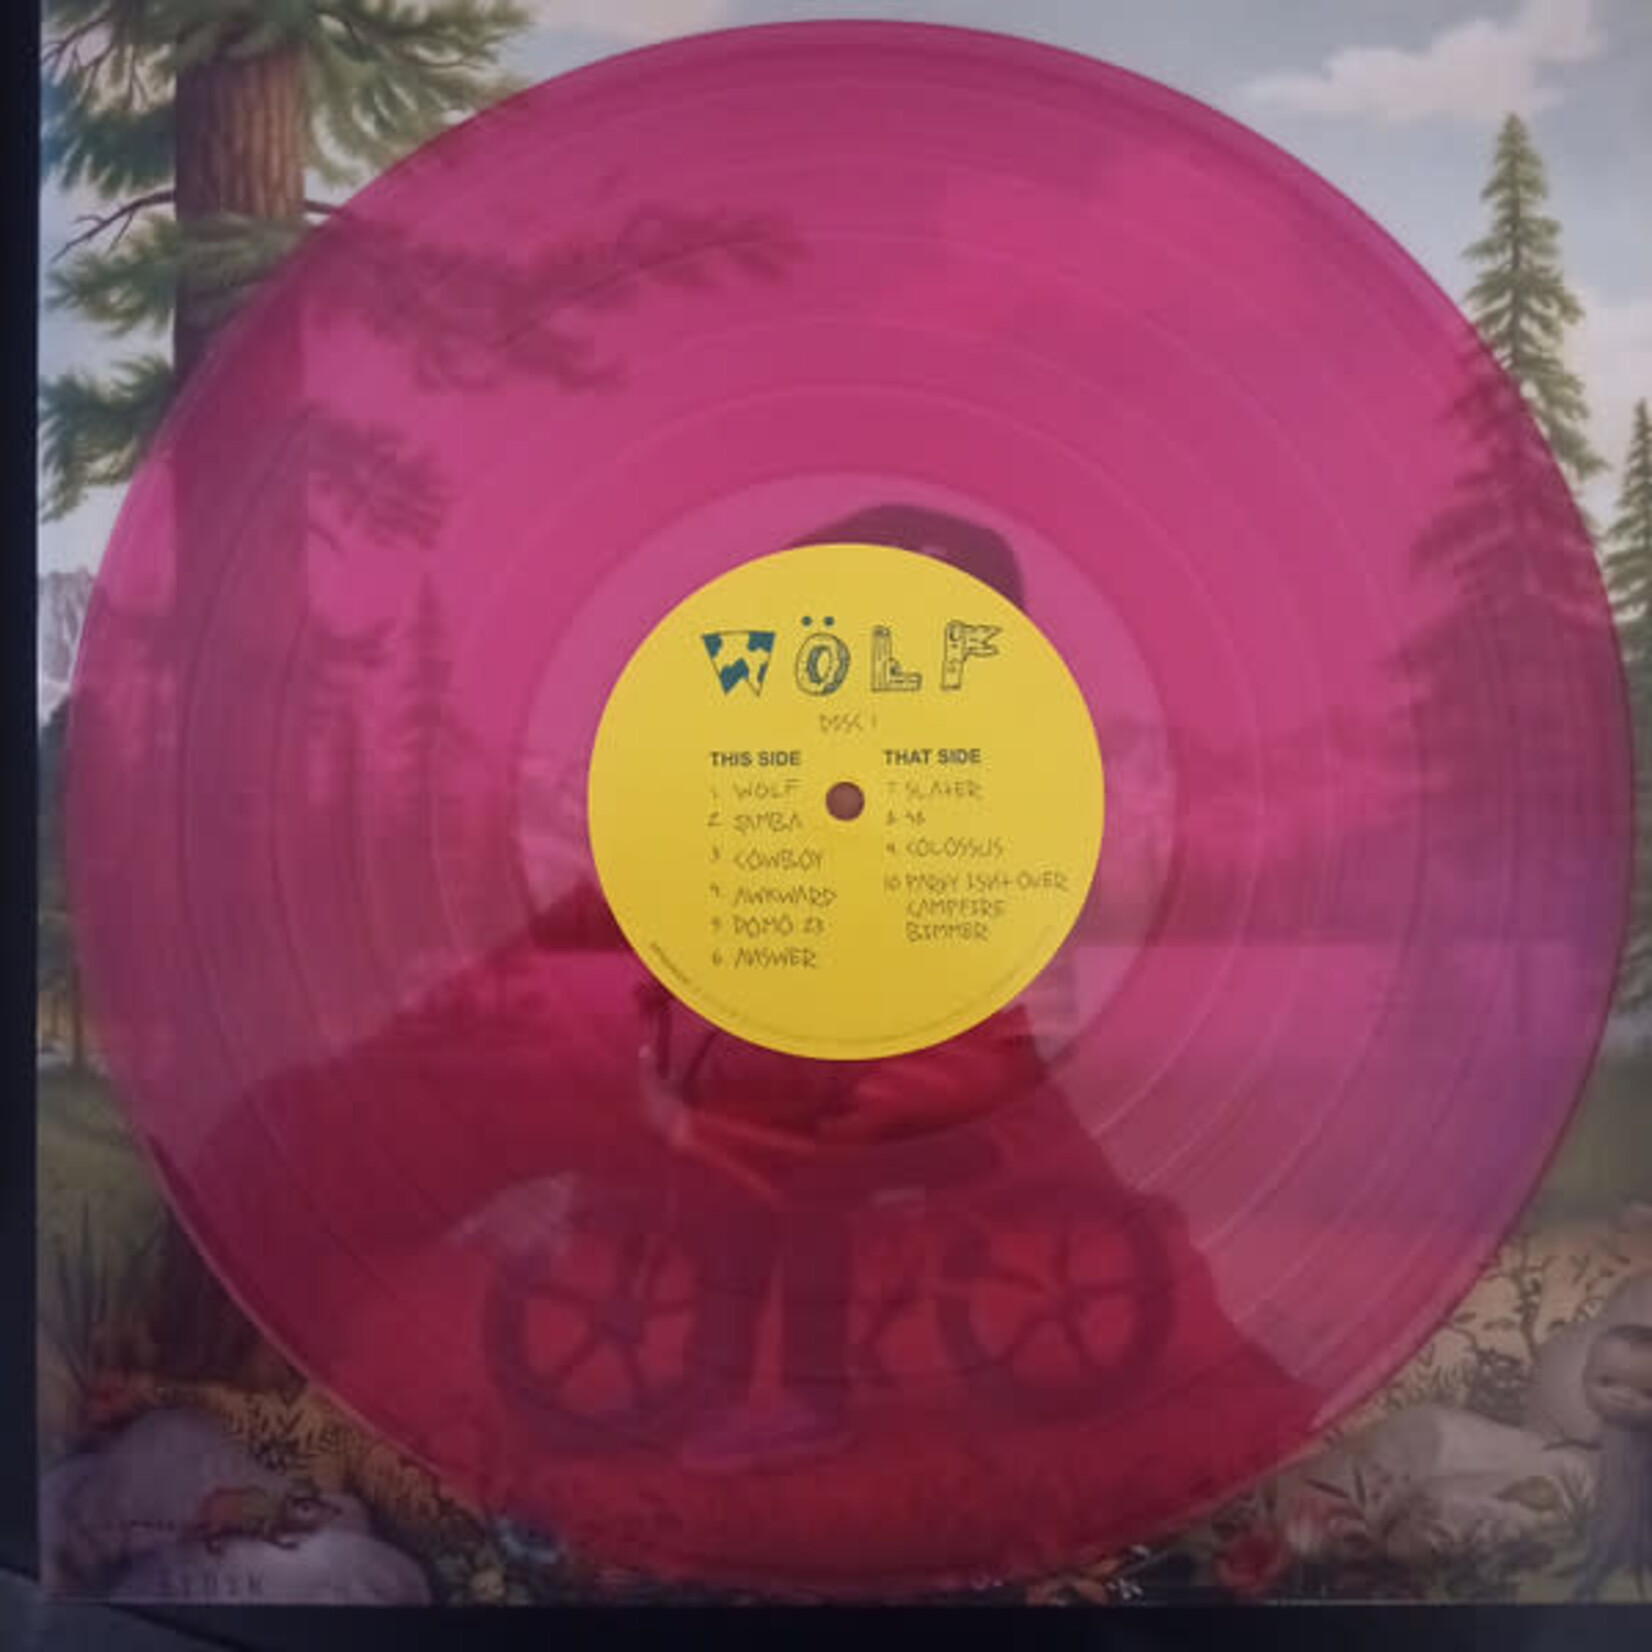 [Kollectibles] Tyler, the Creator - Wolf (pink vinyl, 2014 EU)